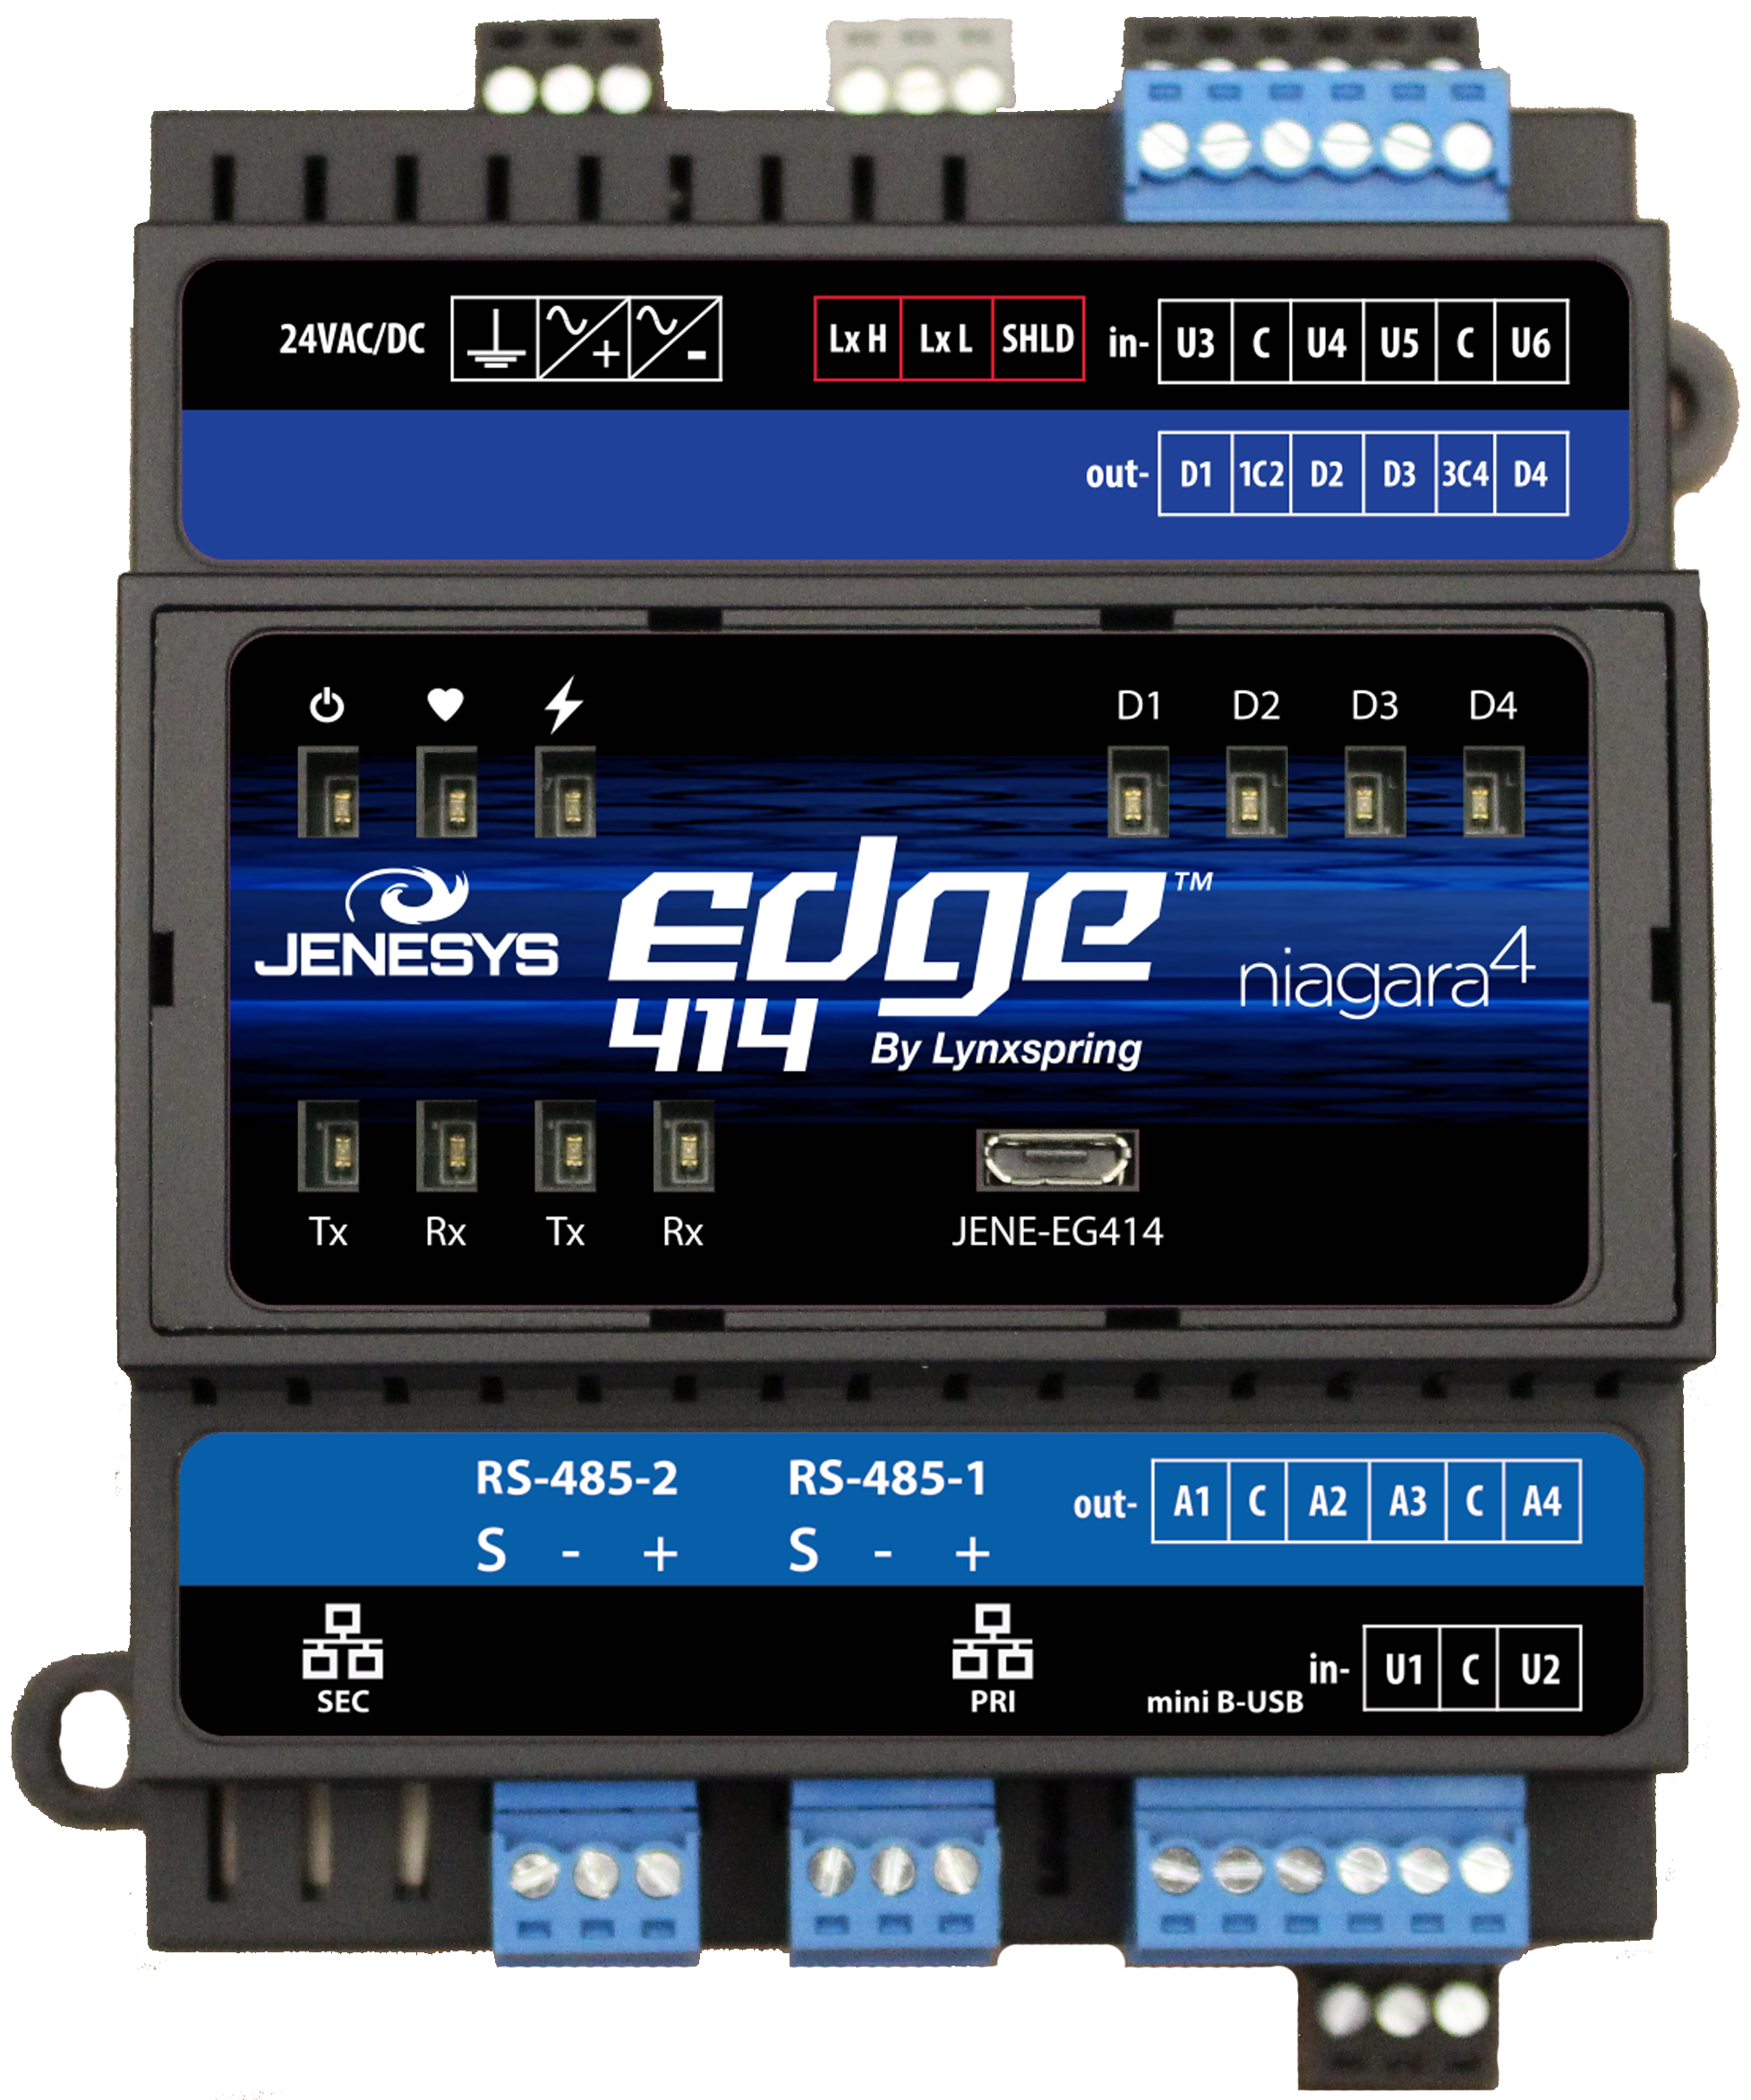 JENEsys® Edge™ 414 IP Programmable Equipment Controller